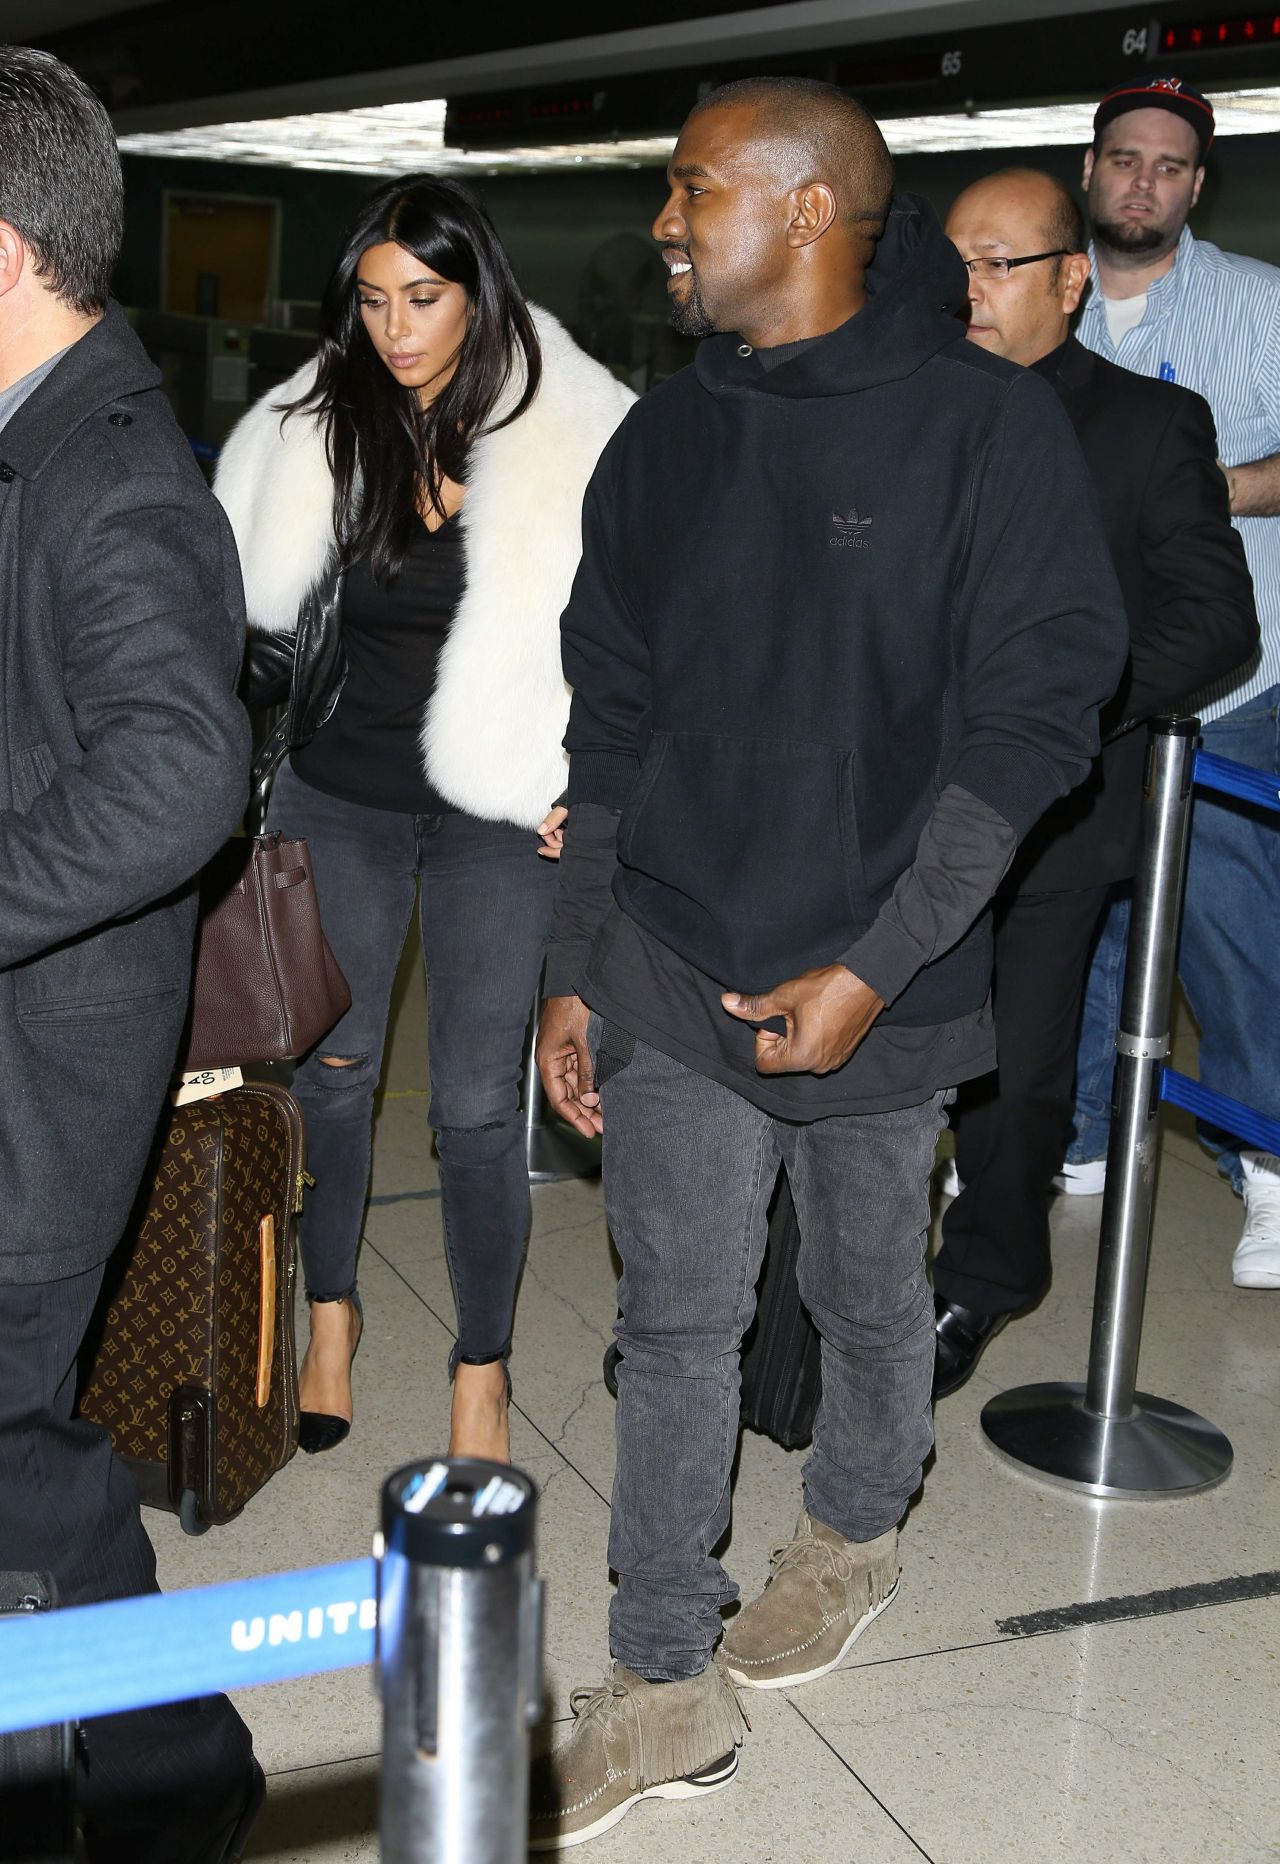 Kim Kardashian at LAX Airport February 13, 2009 – Star Style